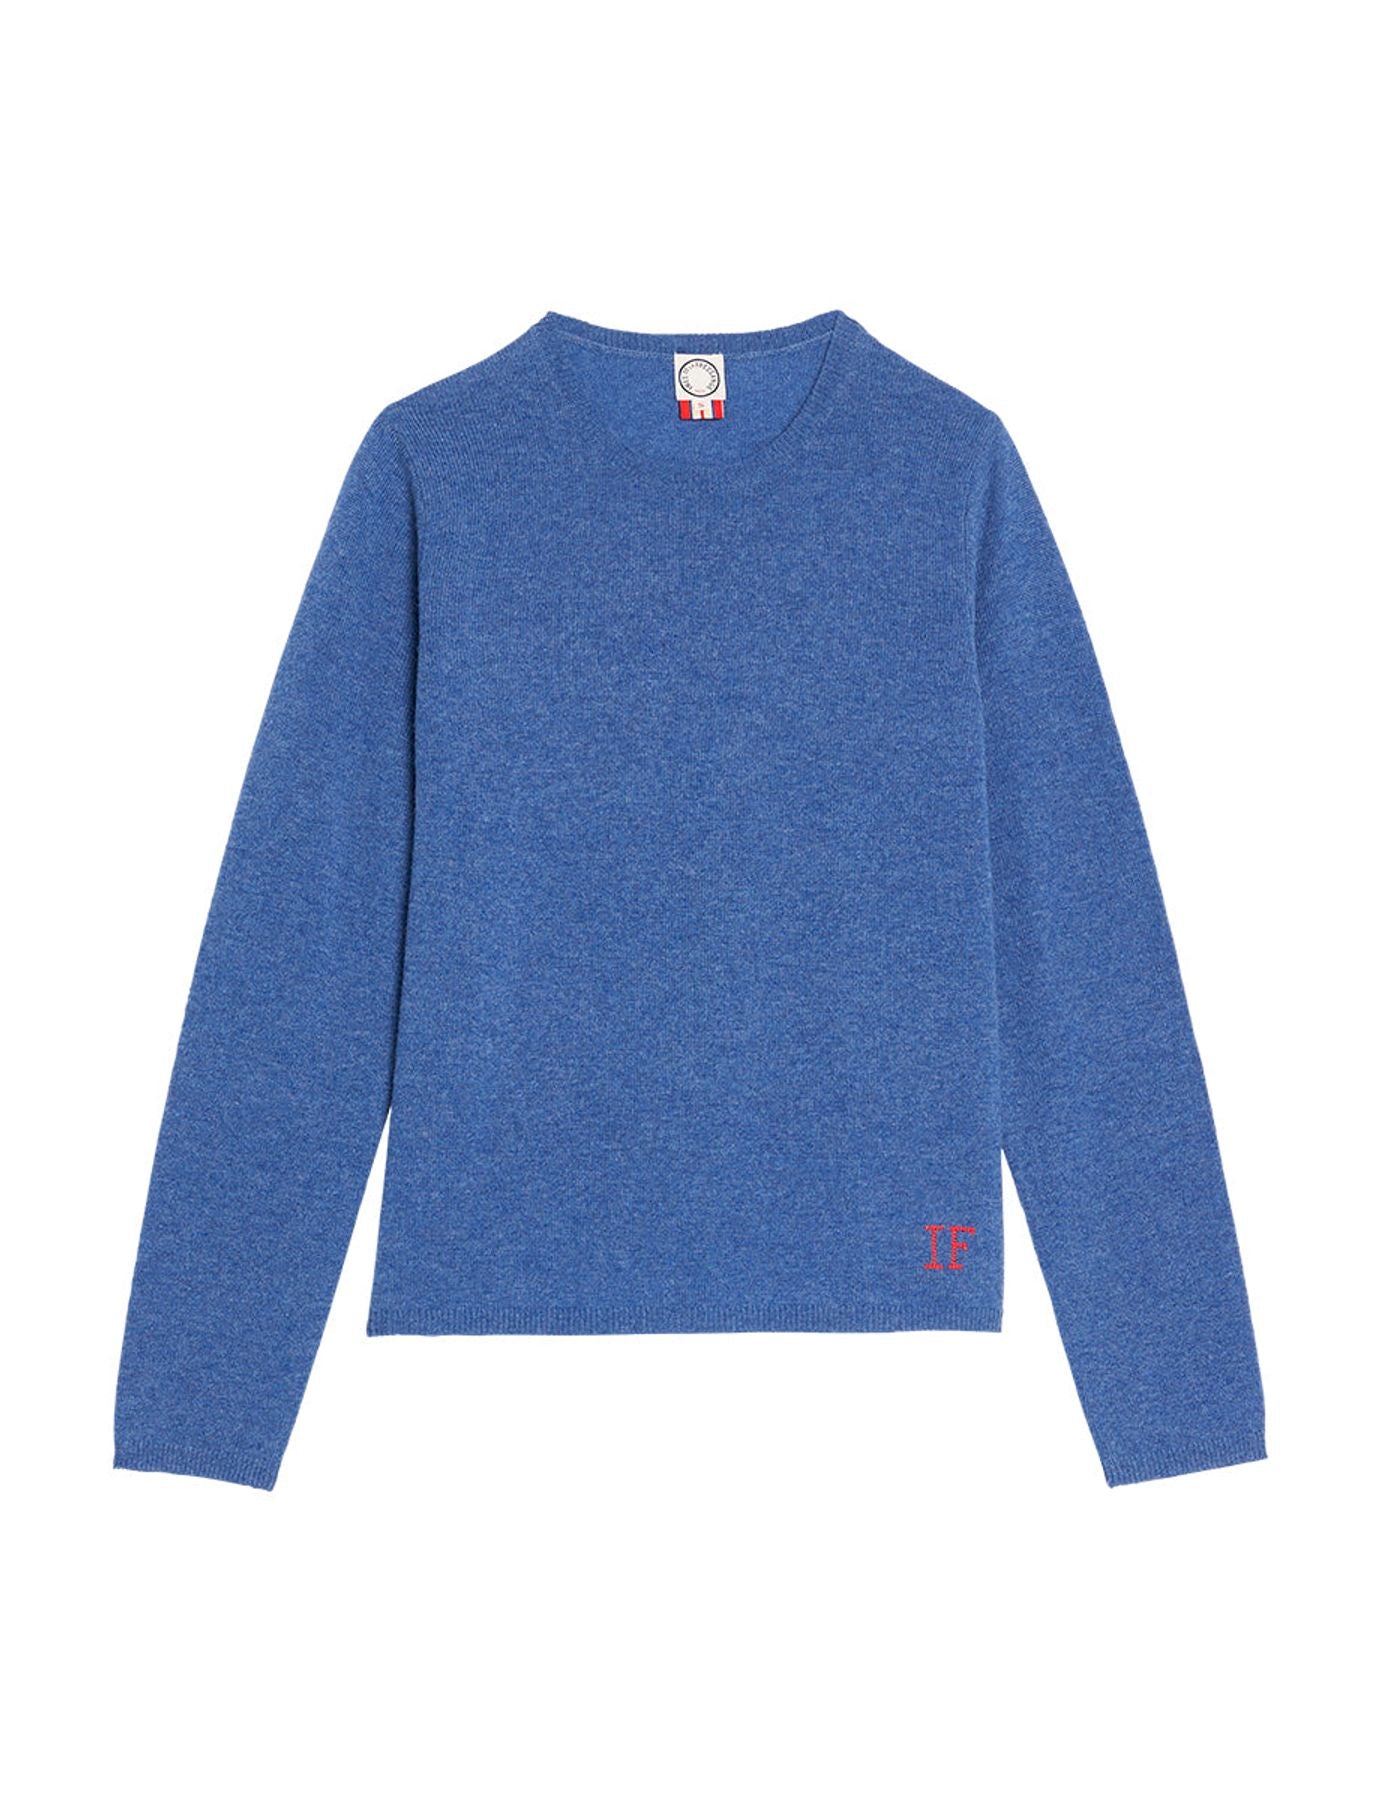 sweater-angelina-blue-denim